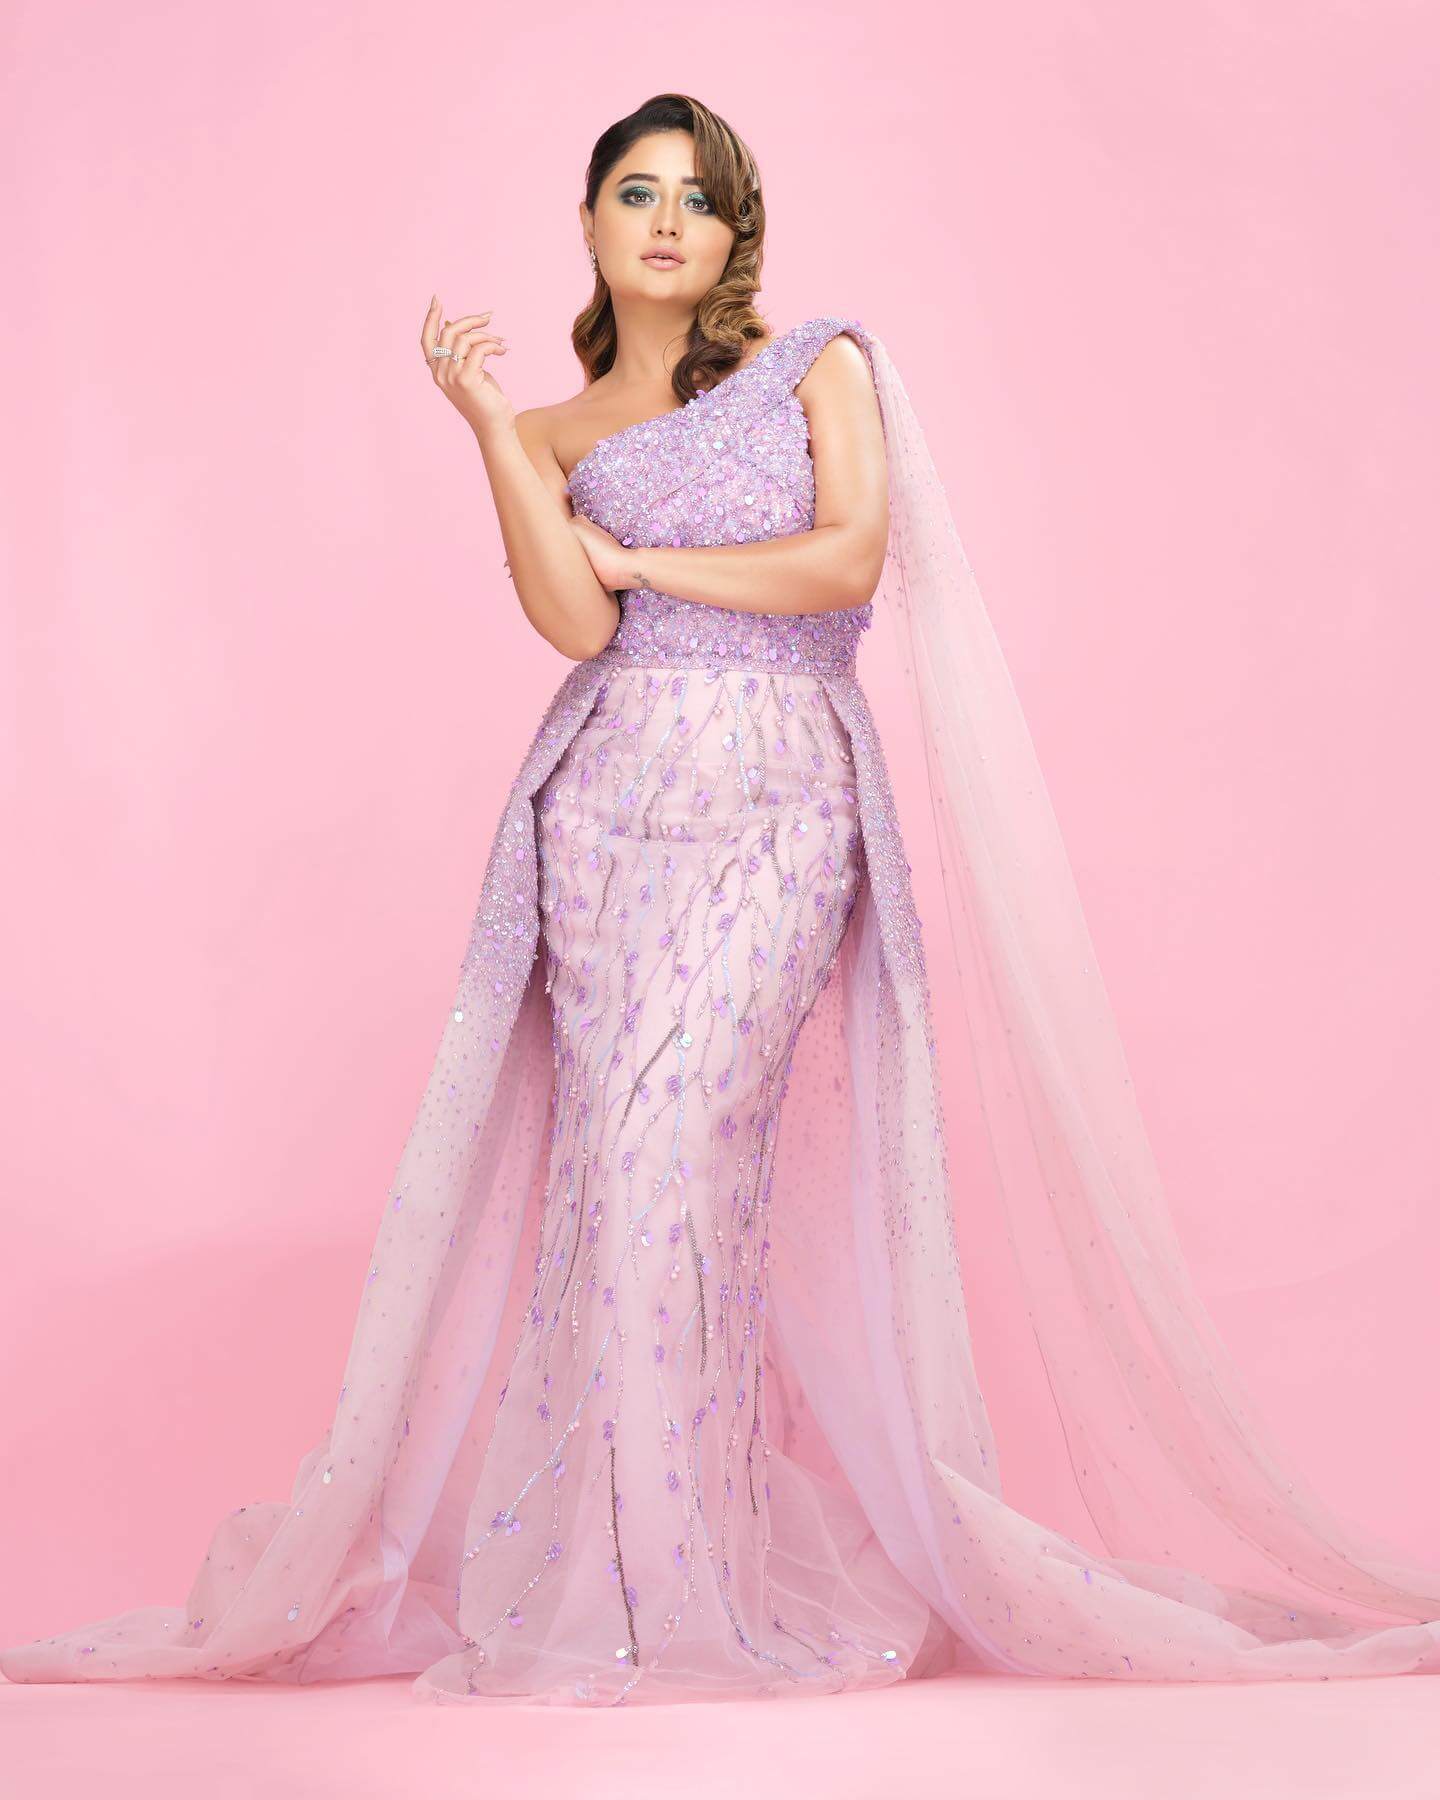 Big Boss 13 Fame Rashami Desai Princess Look In Light Purple Embellished Mermaid Gown